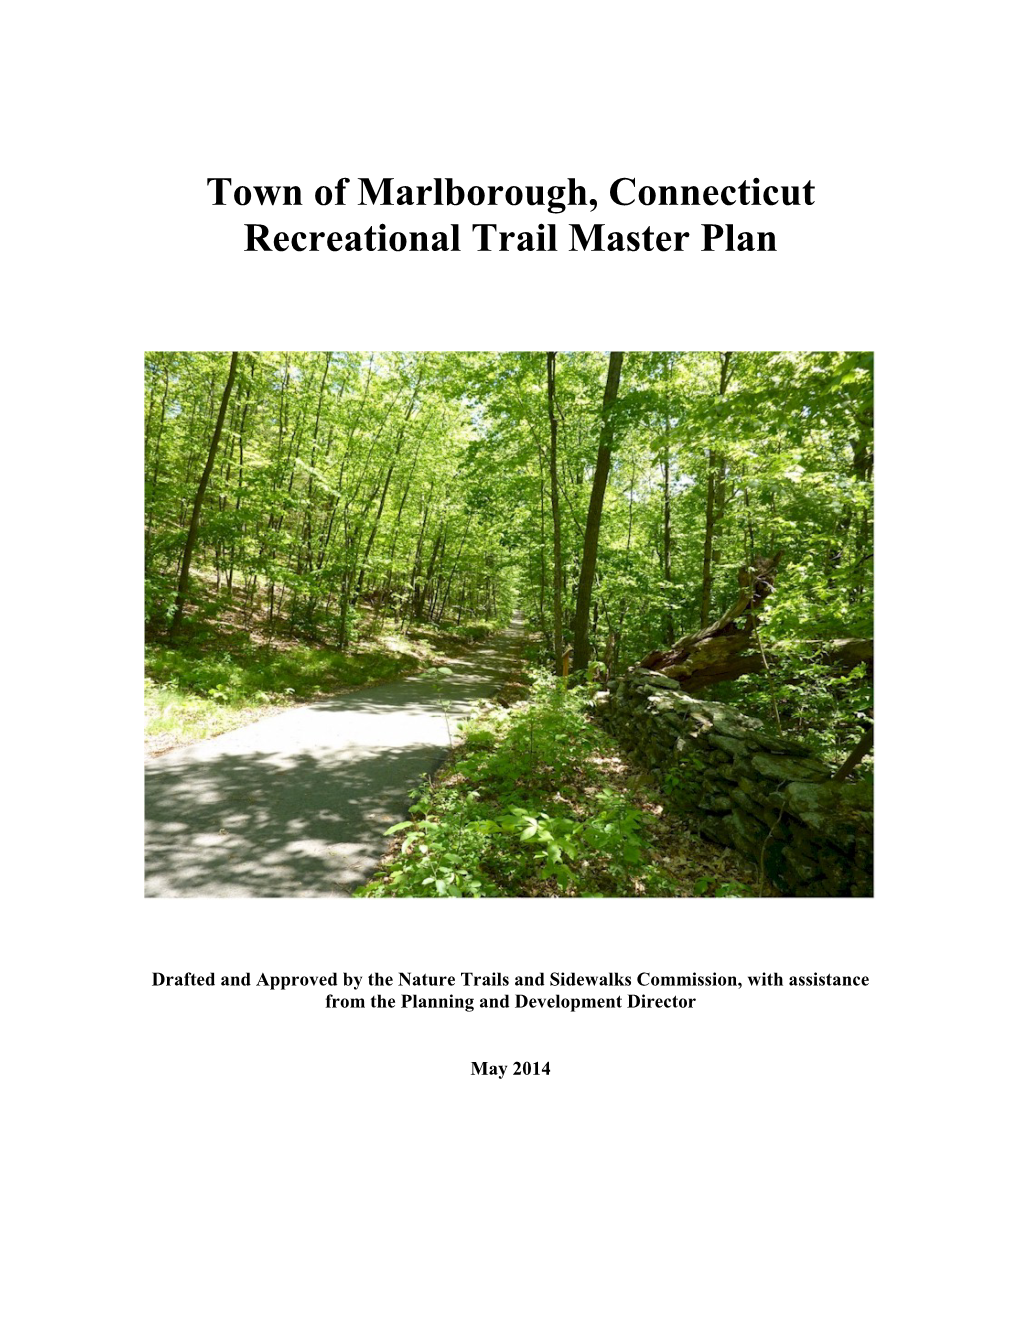 Town of Marlborough, Connecticut Recreational Trail Master Plan